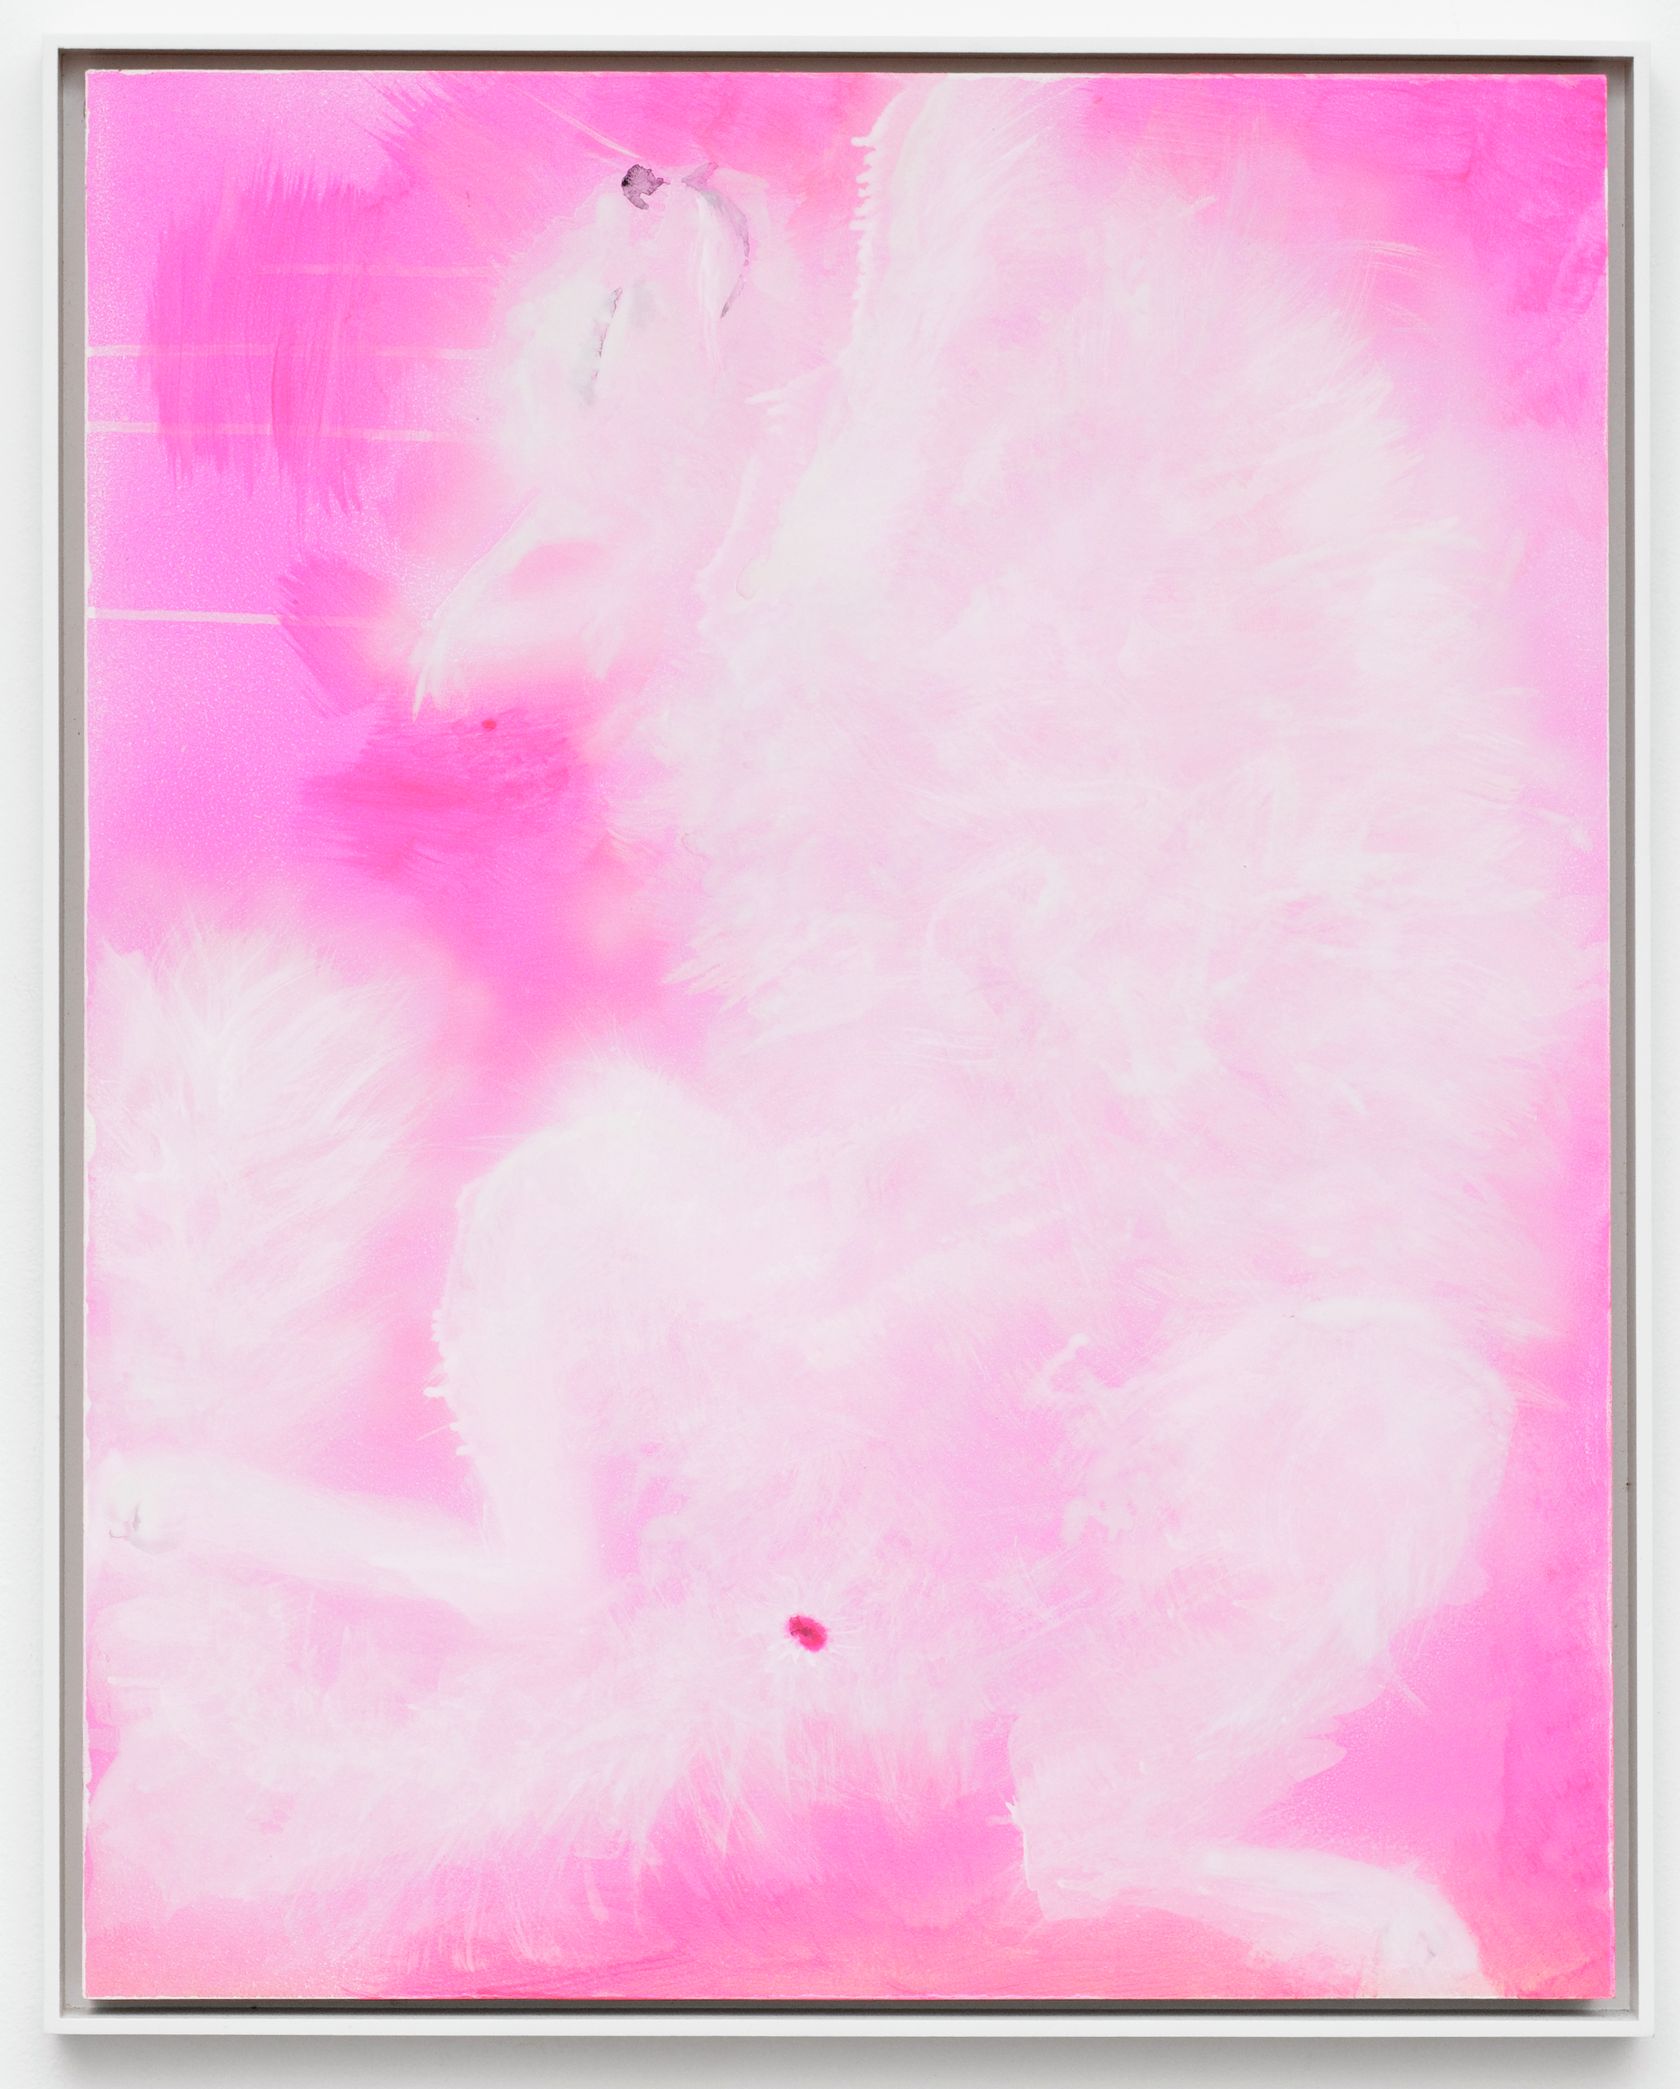 Kevin Ford, White Kitty, 2019 Acrylique sur panneau76 × 61 cm / 30 × 24 in. | 79 × 64 cm / 31 1/8 × 25 2/8 in. (encadré/framed)